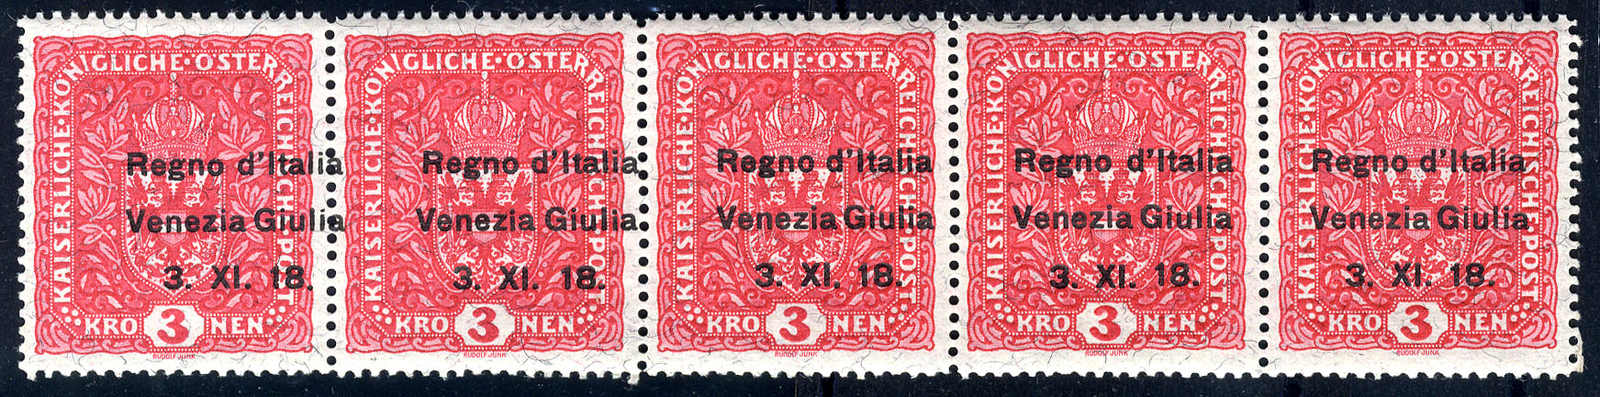 Lot 1042 - europe Italian Occupation Julisch Venetien -  Viennafil Auktionen Auction #66 Worldwide Mail Auction: Italy, Austria, Germany, Europe and Overseas